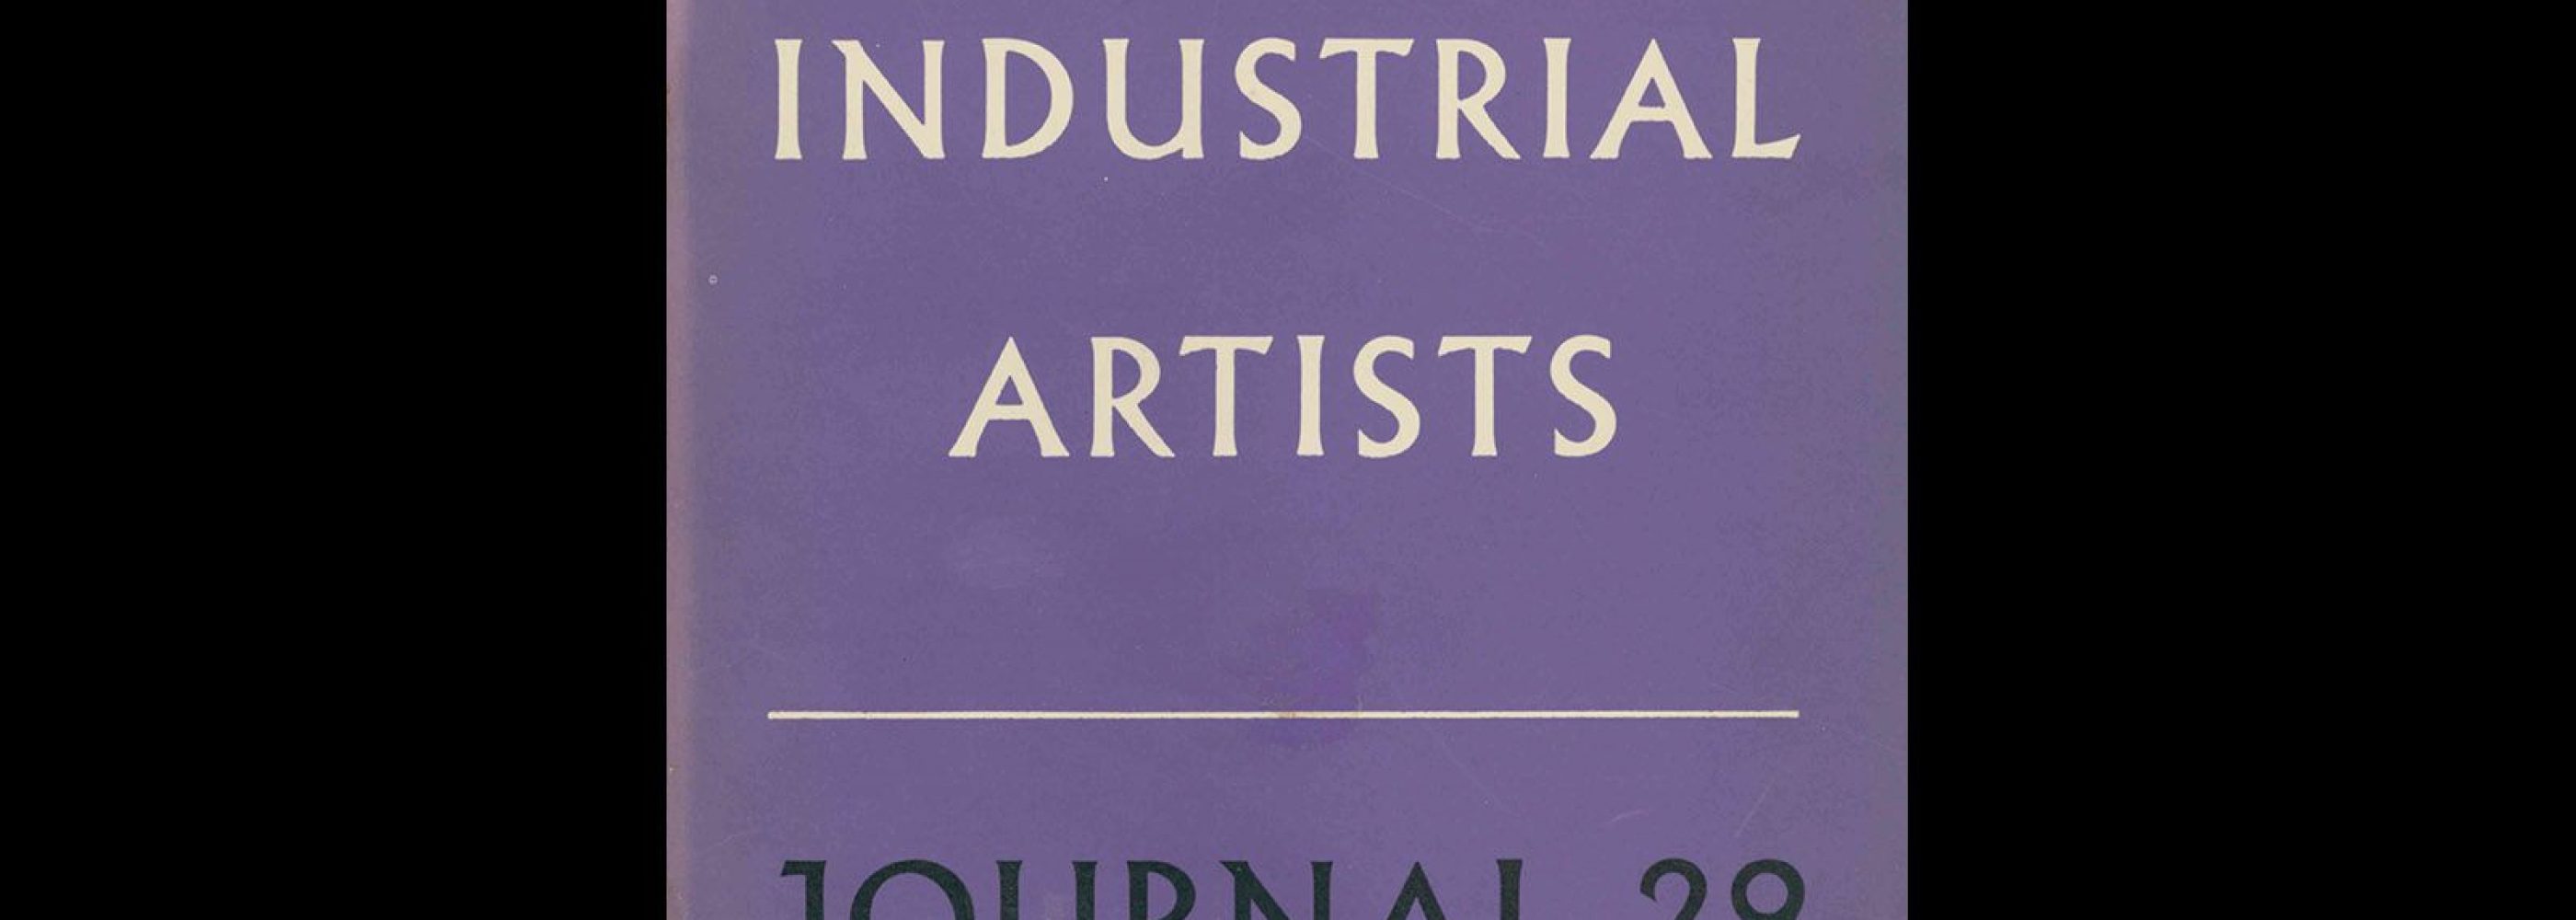 Society of Industrial Artists, 29, October 1952